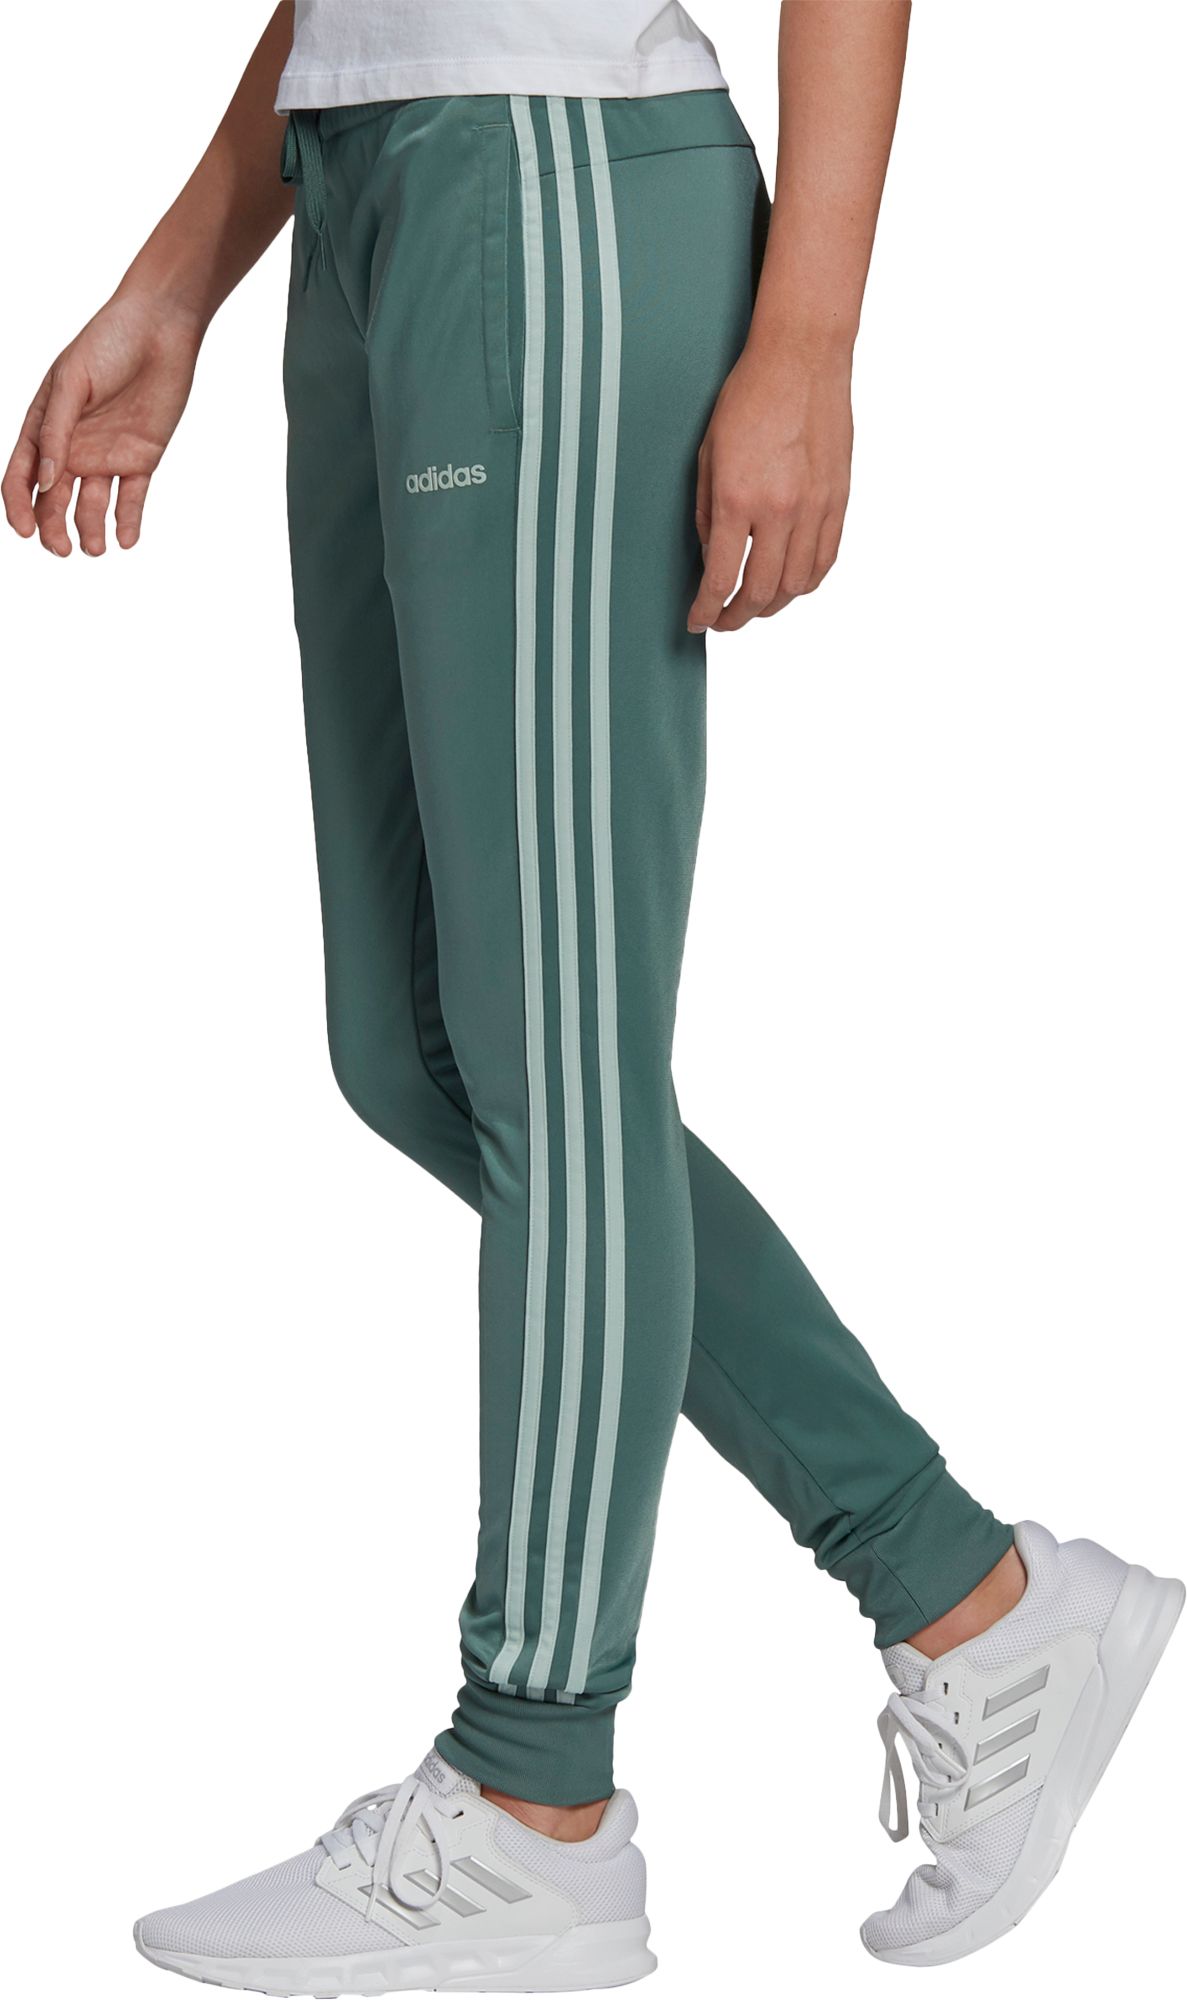 adidas women's tricot jogger pants